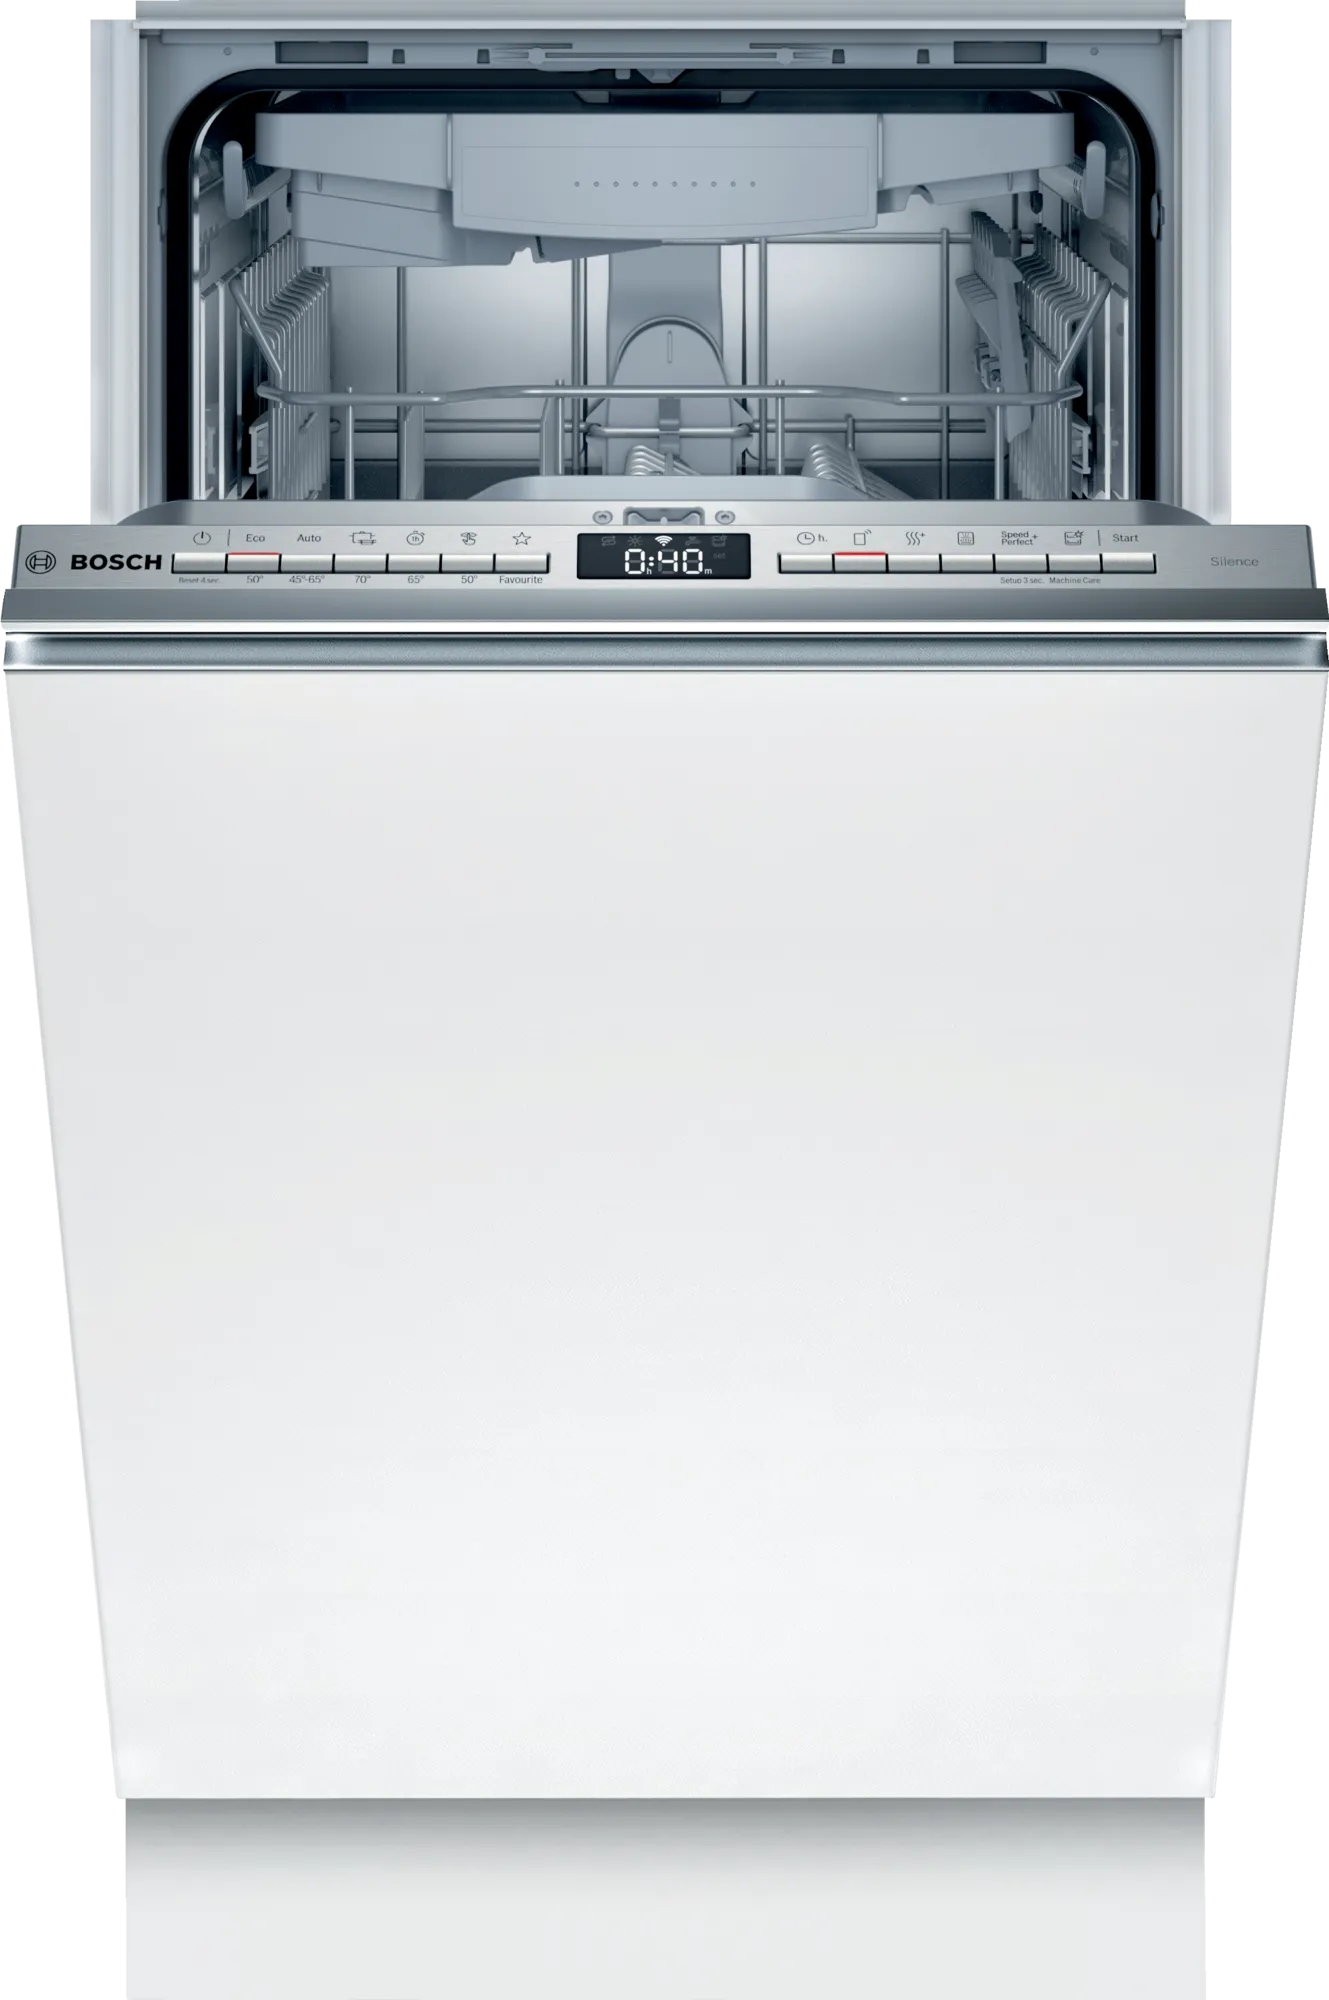 Gorenje gv520e10. Встраиваемая посудомоечная машина Bosch SMV 4evx14 e. Посудомоечная машина Bosch 60 встраиваемая. Встраиваемая посудомоечная машина Bosch smv4hvx31e. Российские посудомоечные машины